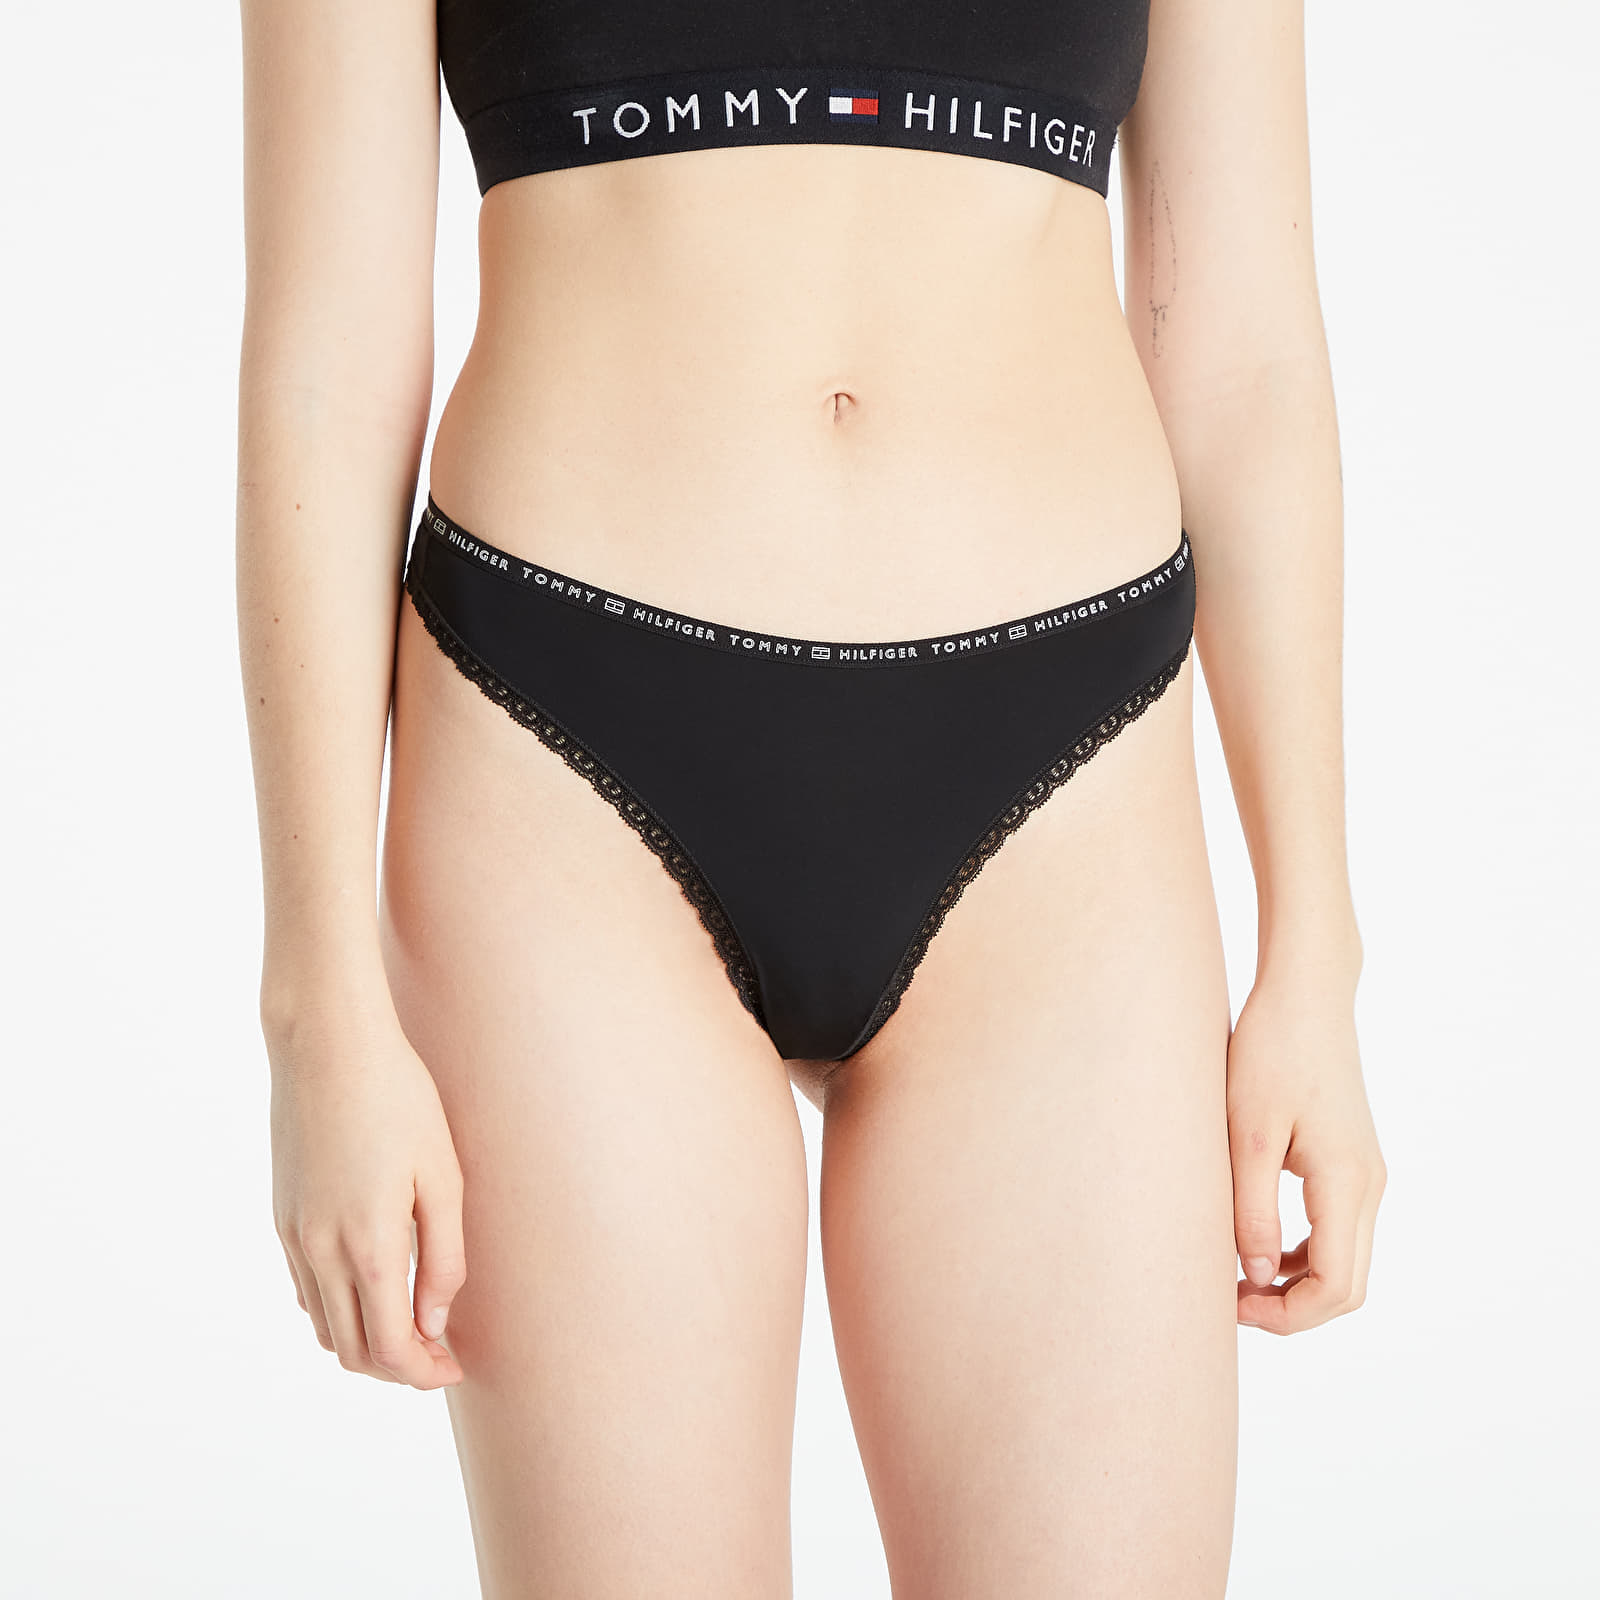  Women's Panties - Tommy Hilfiger / Women's Panties